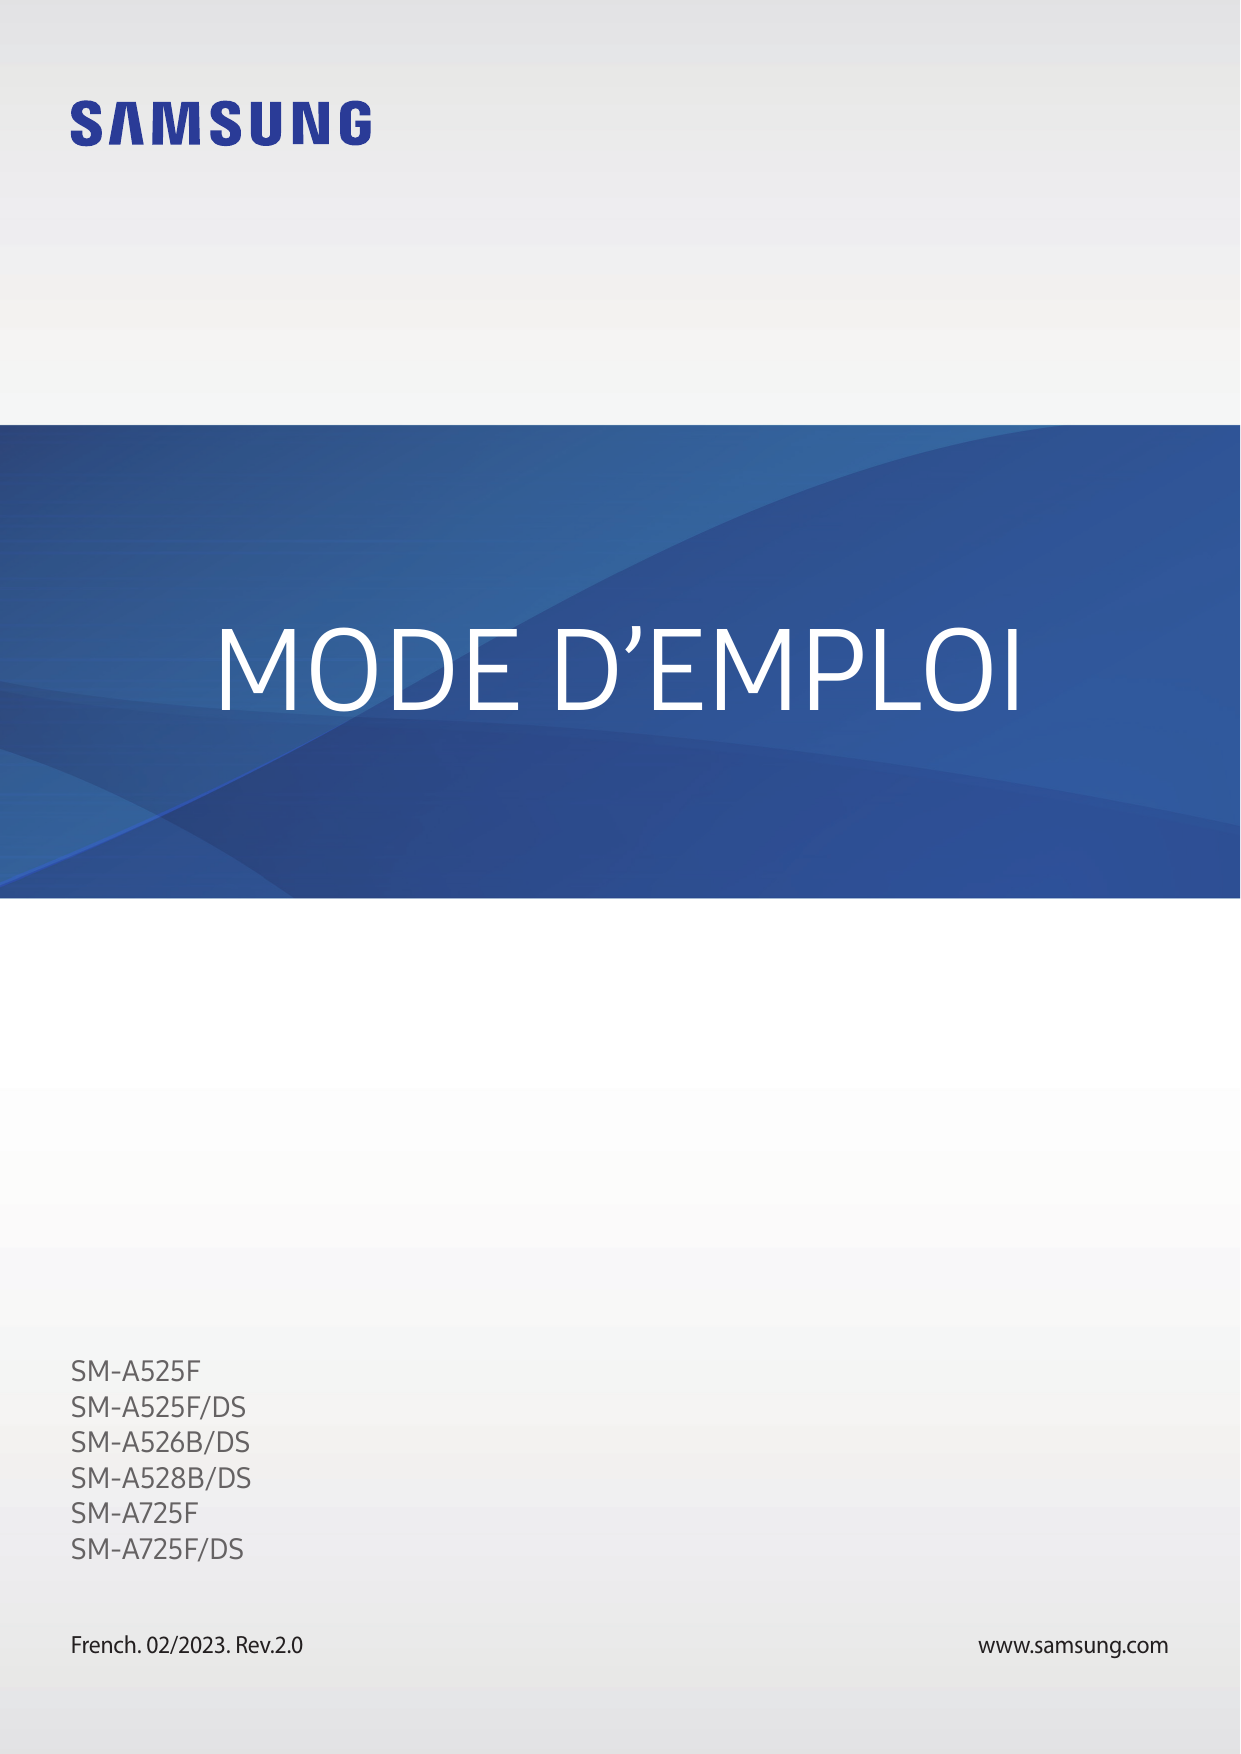 MODE D’EMPLOISM-A525FSM-A525F/DSSM-A526B/DSSM-A528B/DSSM-A725FSM-A725F/DSFrench. 02/2023. Rev.2.0www.samsung.com